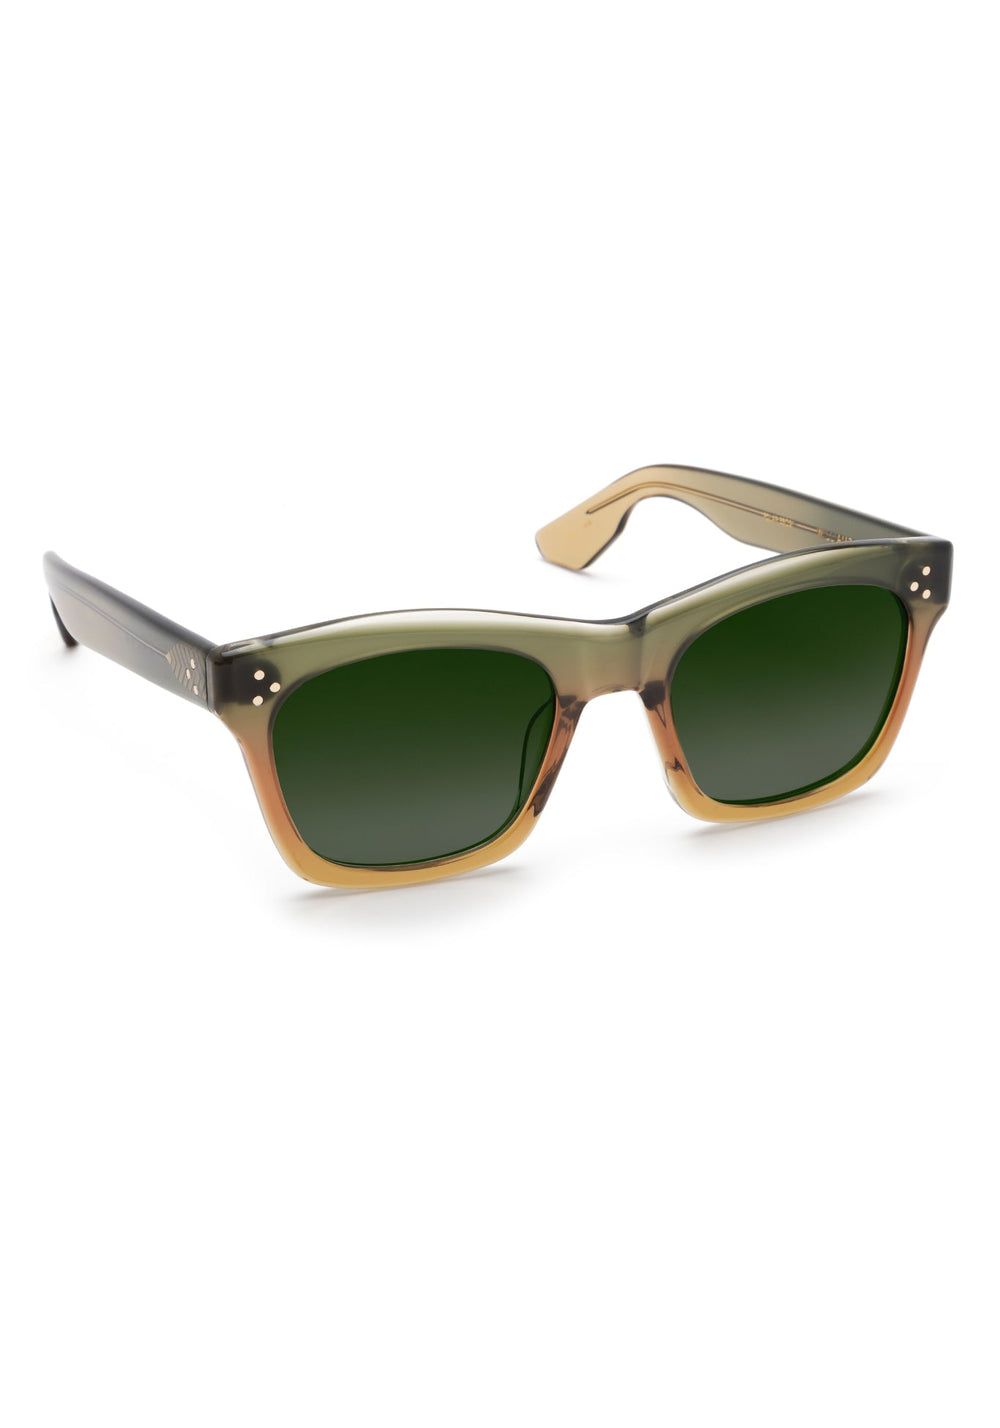 KREWE SUNGALSSES - WILLIAMS | Wasabi Polarized handcrafted green gradient wayfarer polarized sunglasses